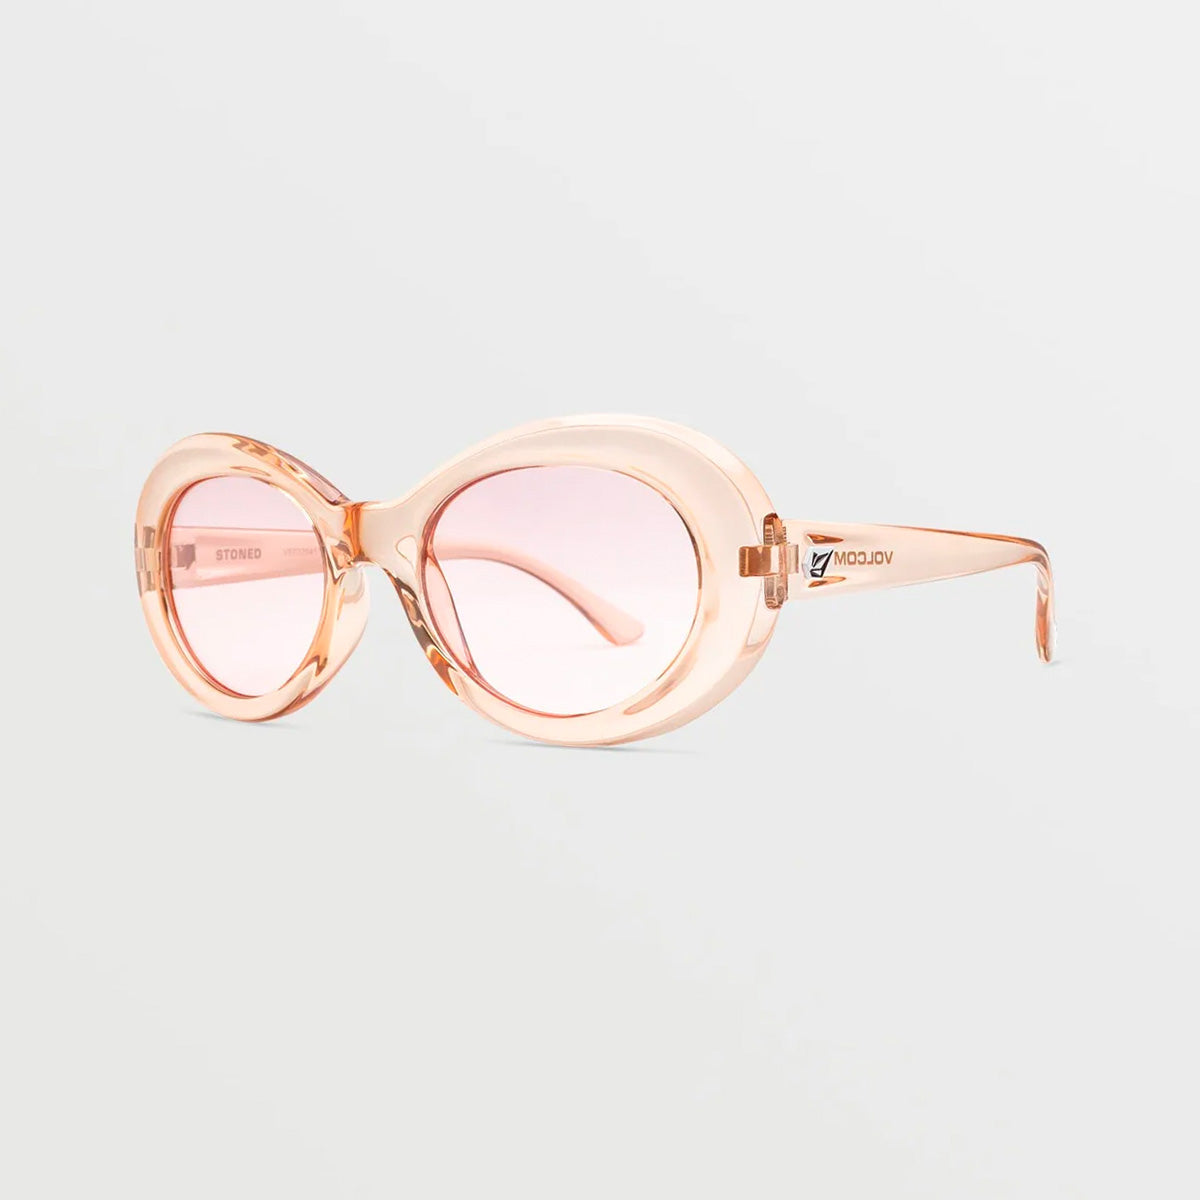 Volcom Stoned Sunglasses Gloss Quail Feather/Pink - Unisex